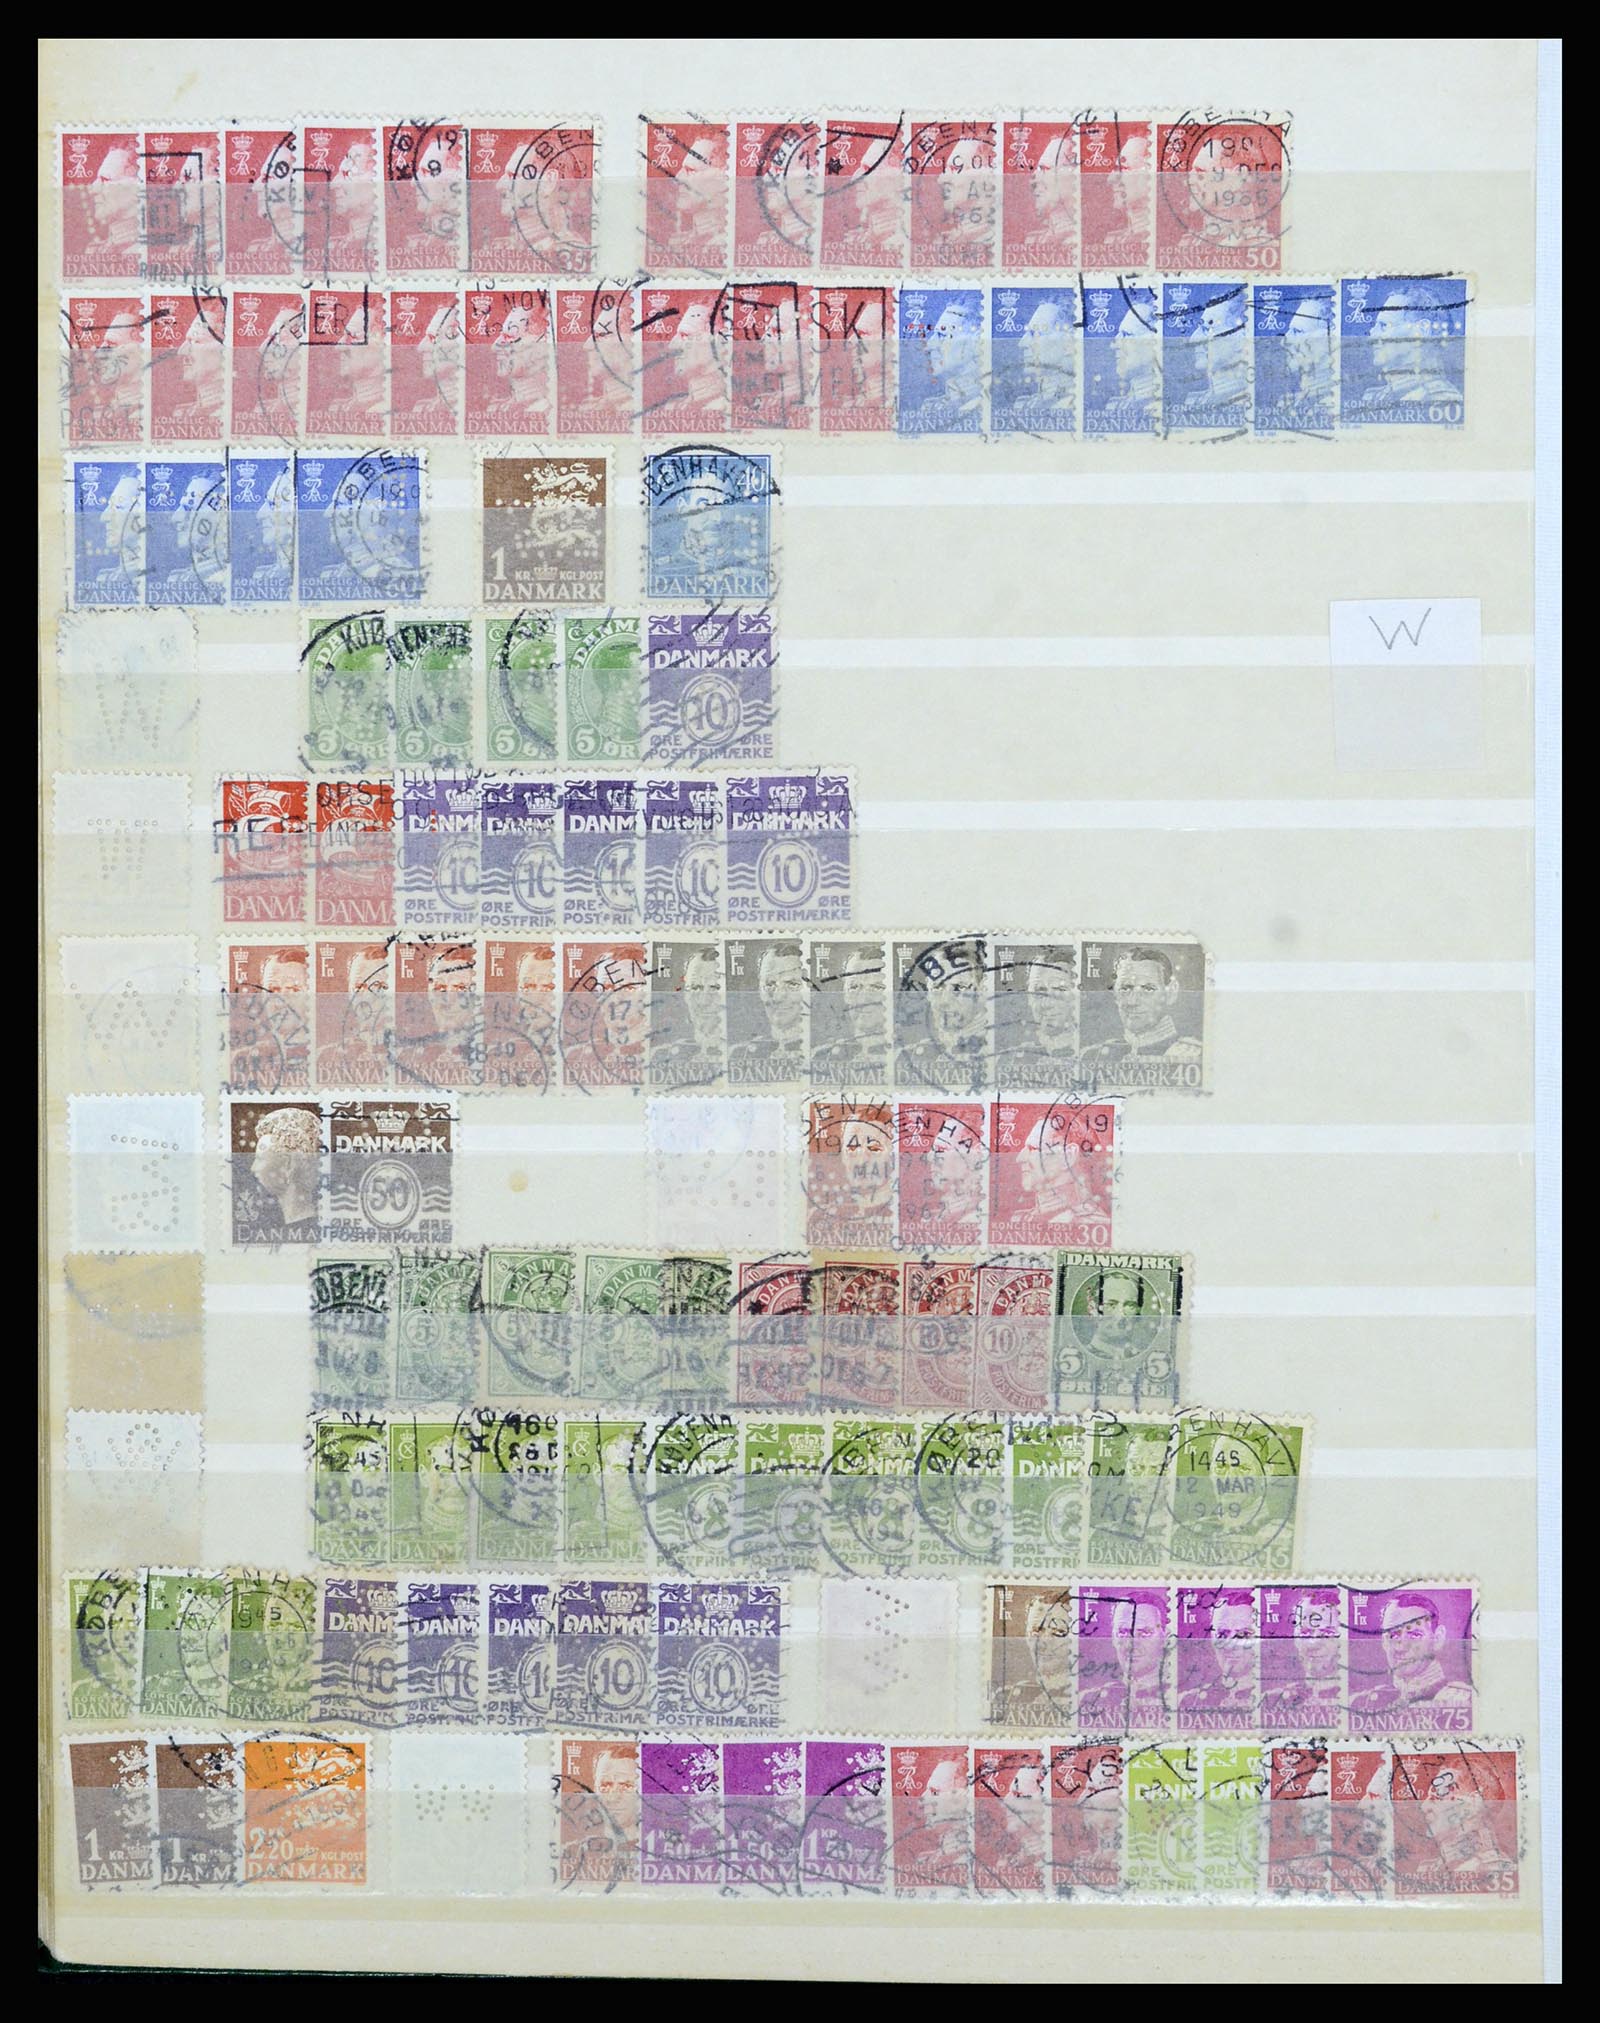 37056 092 - Stamp collection 37056 Denmark perfins.